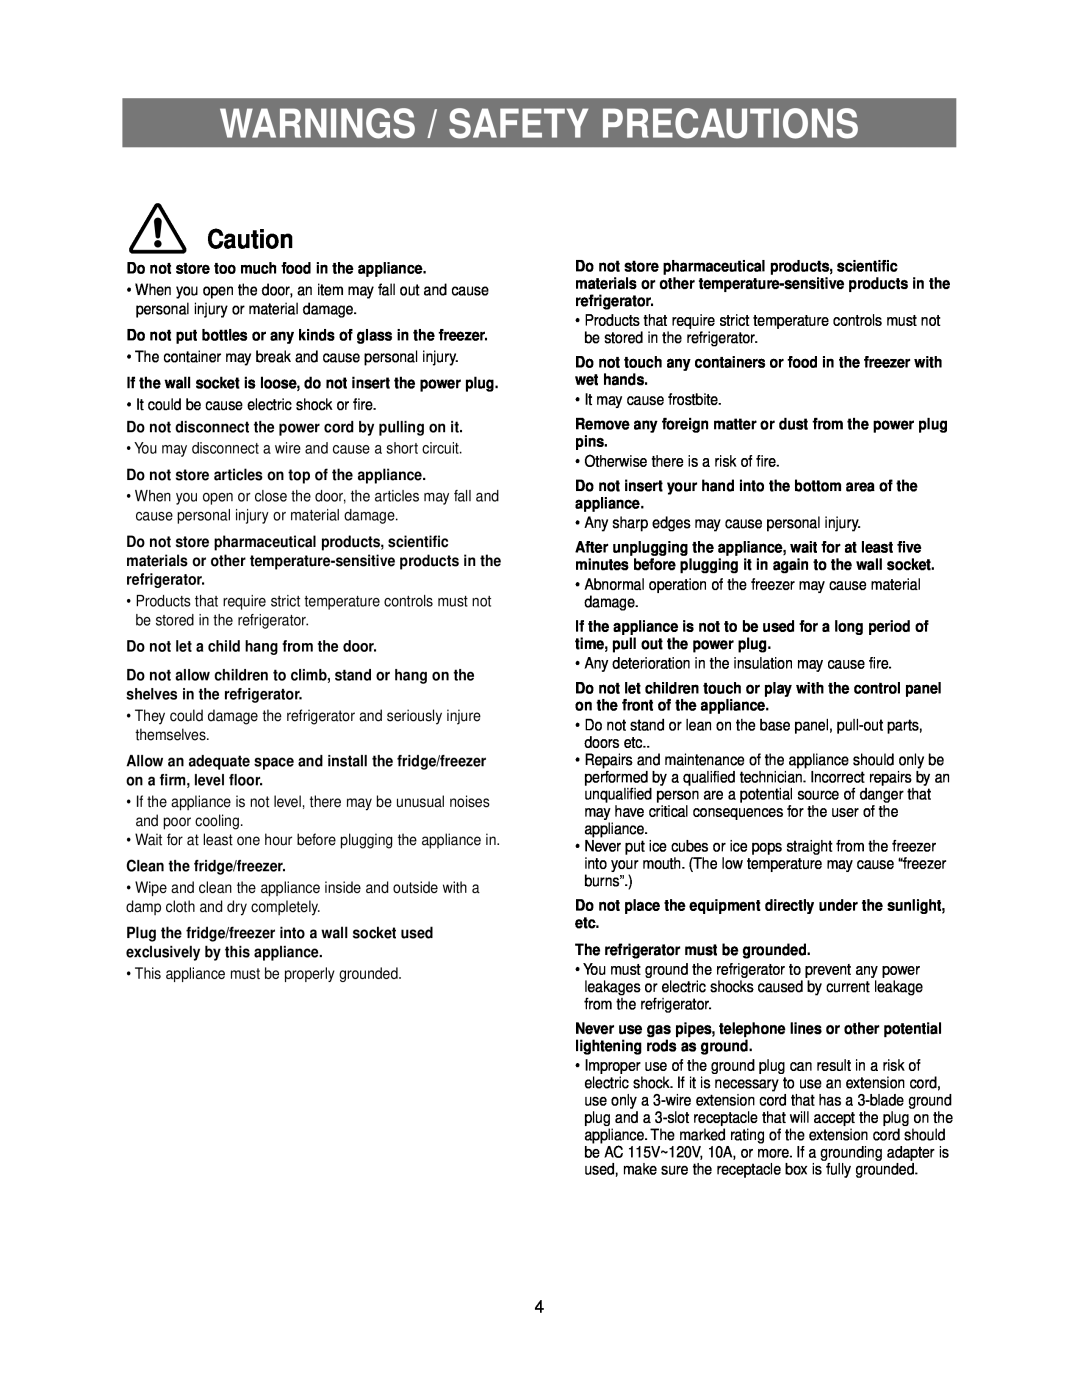 Samsung RB193KASB owner manual Warnings / Safety Precautions 